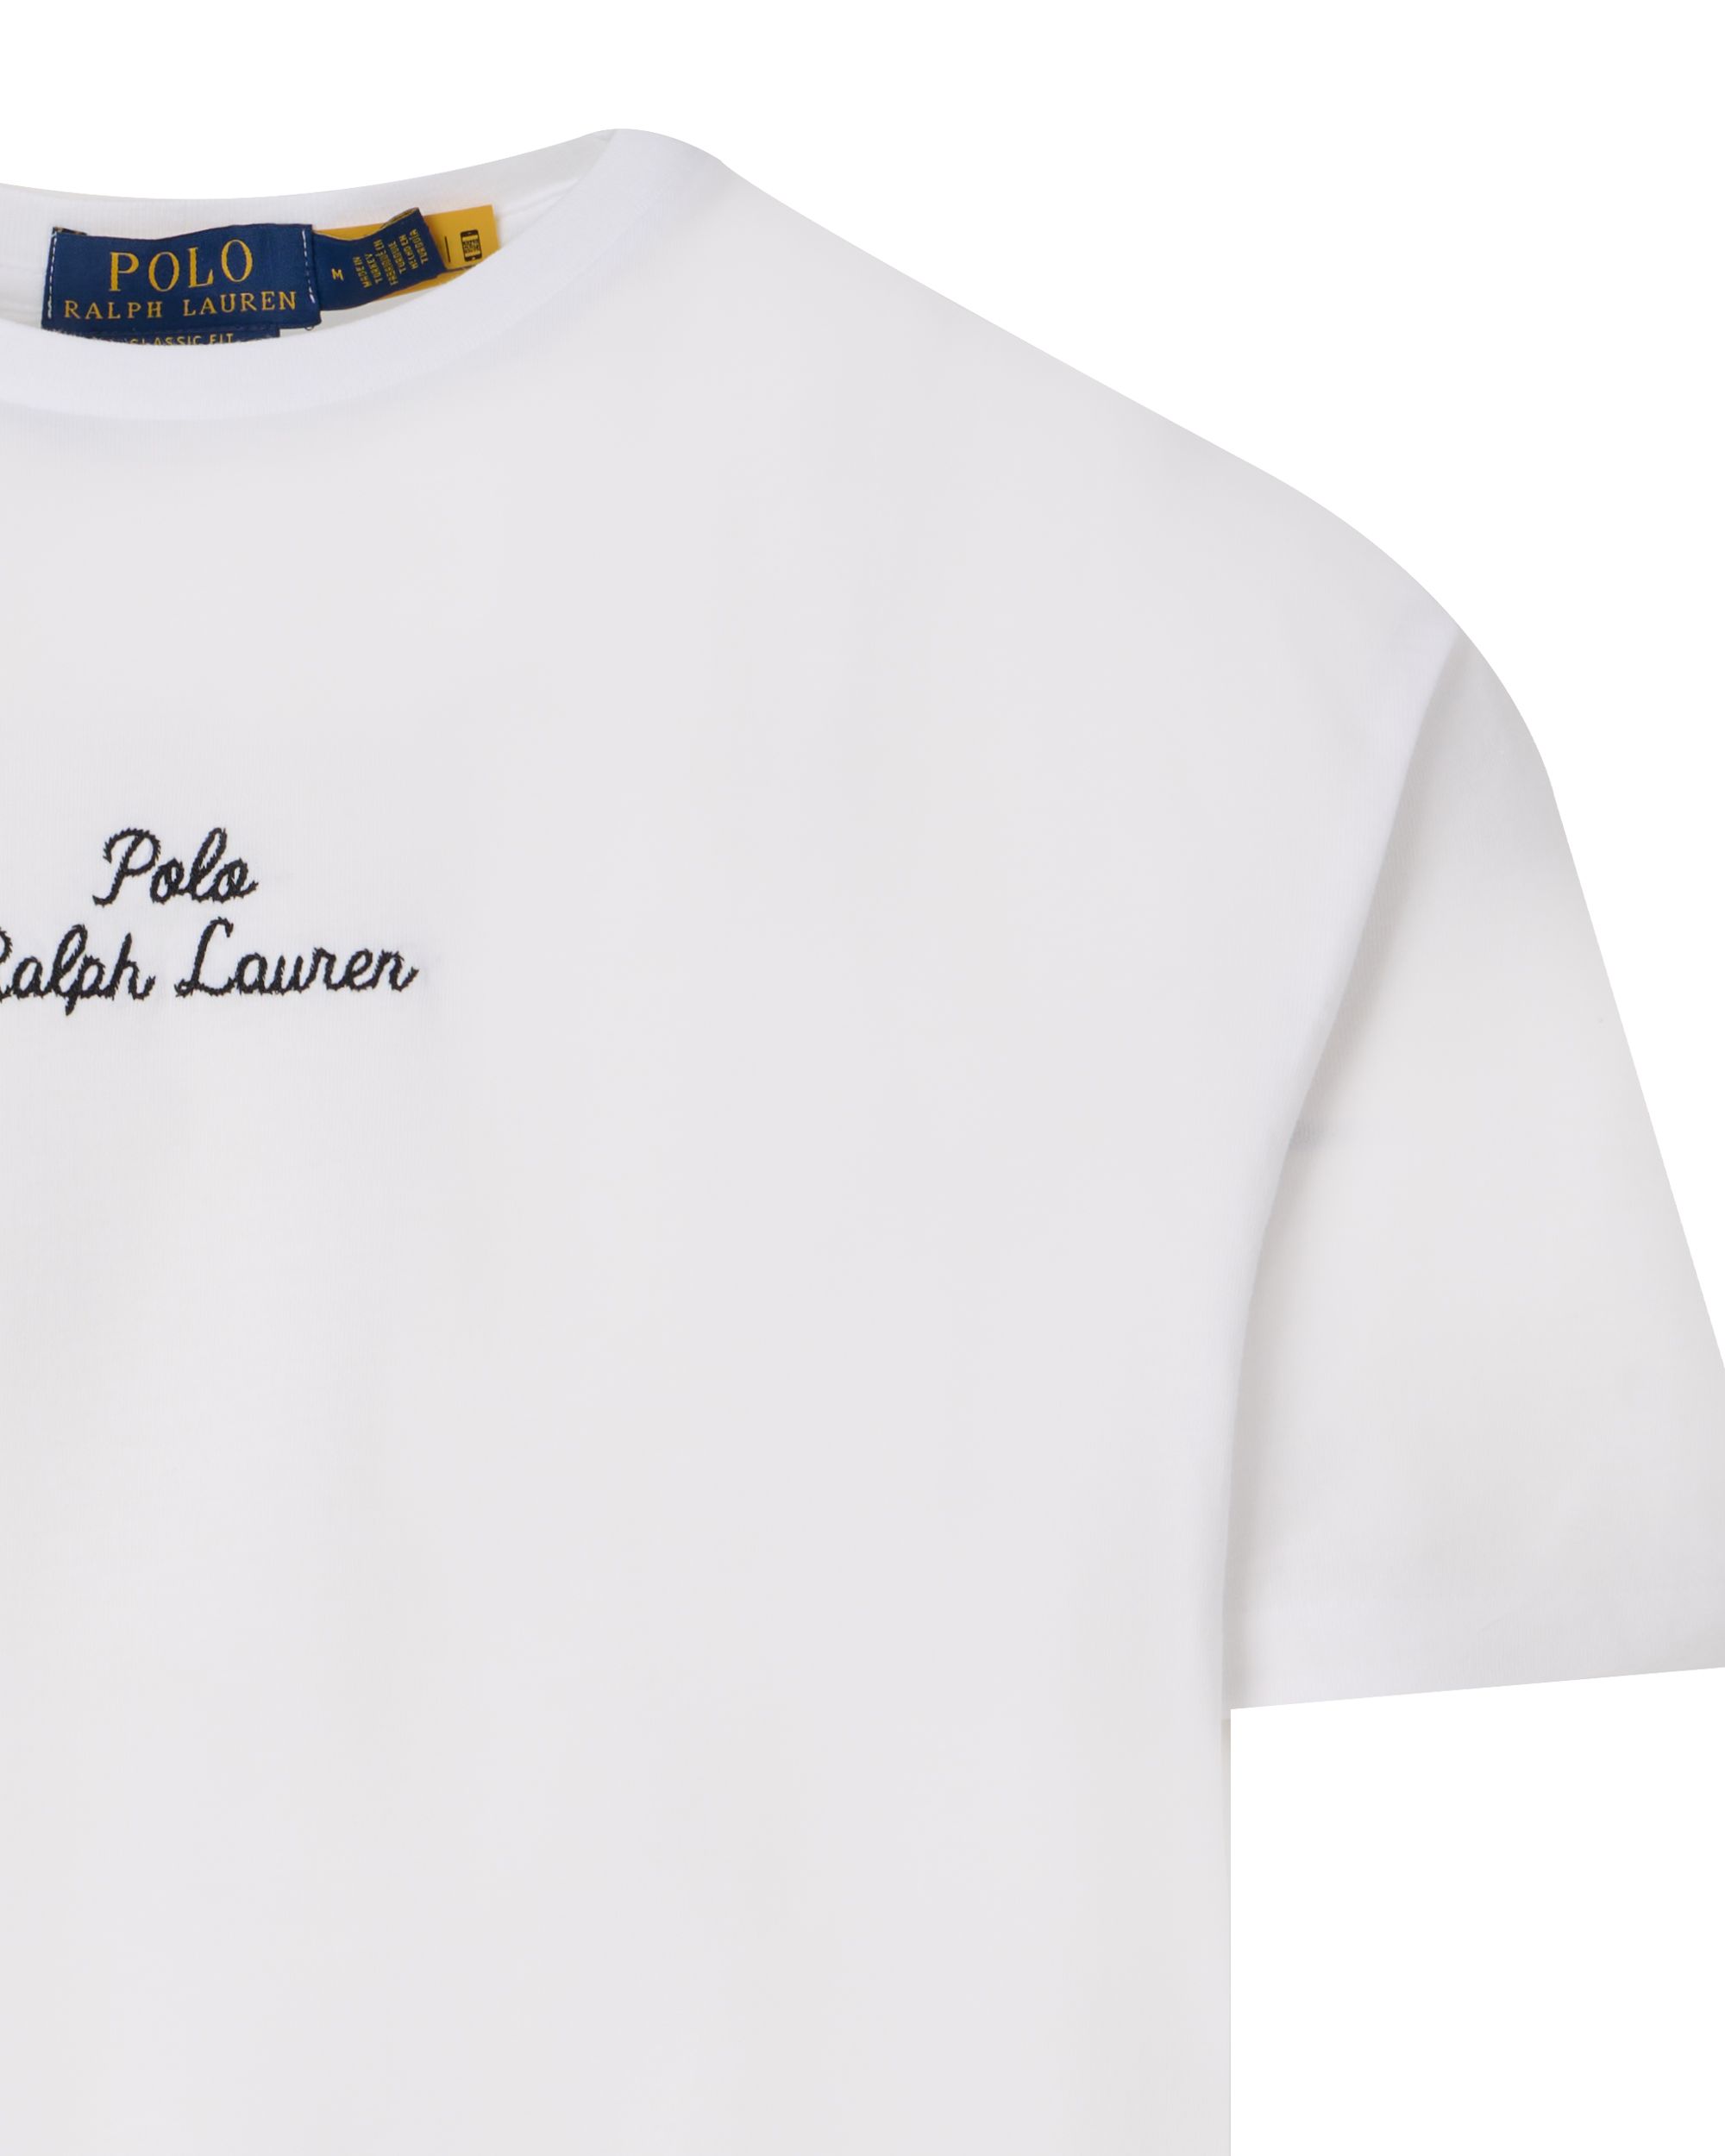 Polo Ralph Lauren T-shirt KM Wit 095299-001-L